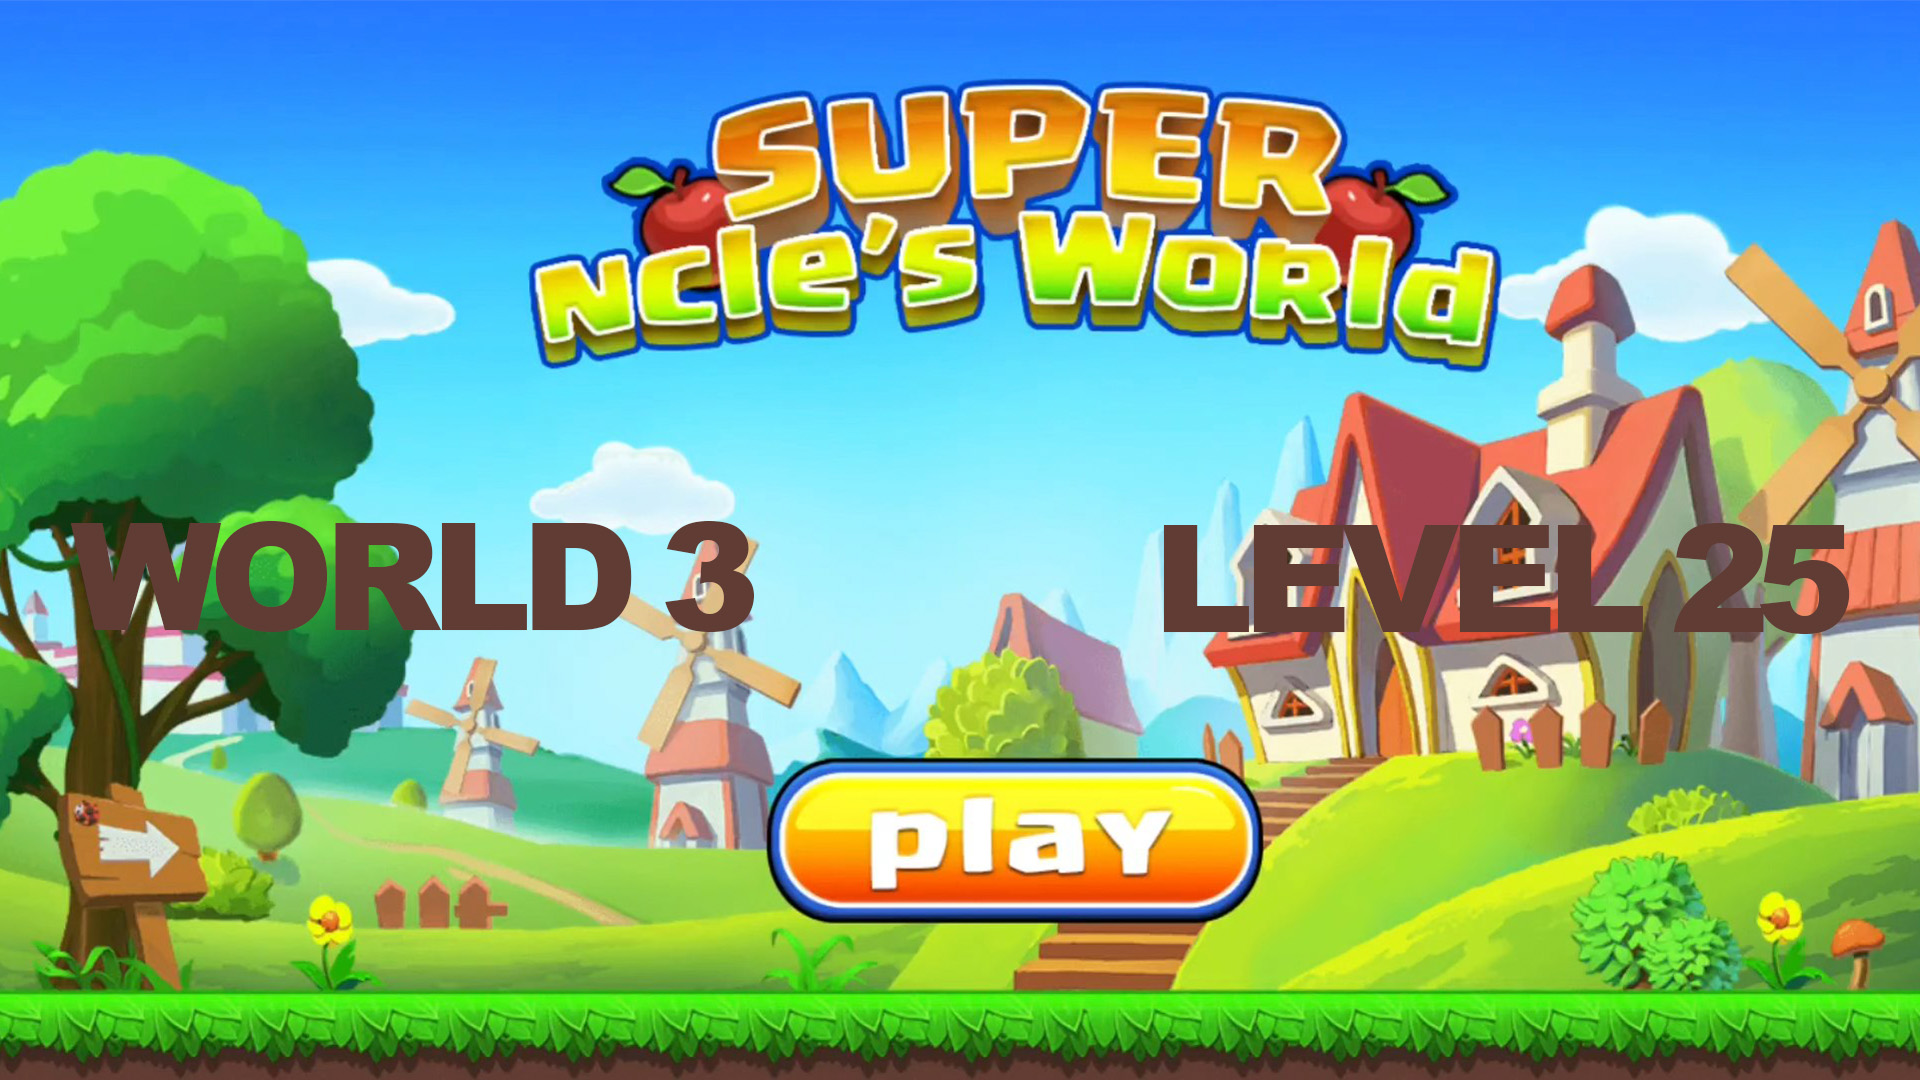 Super ncle's  World 3. Level 25.